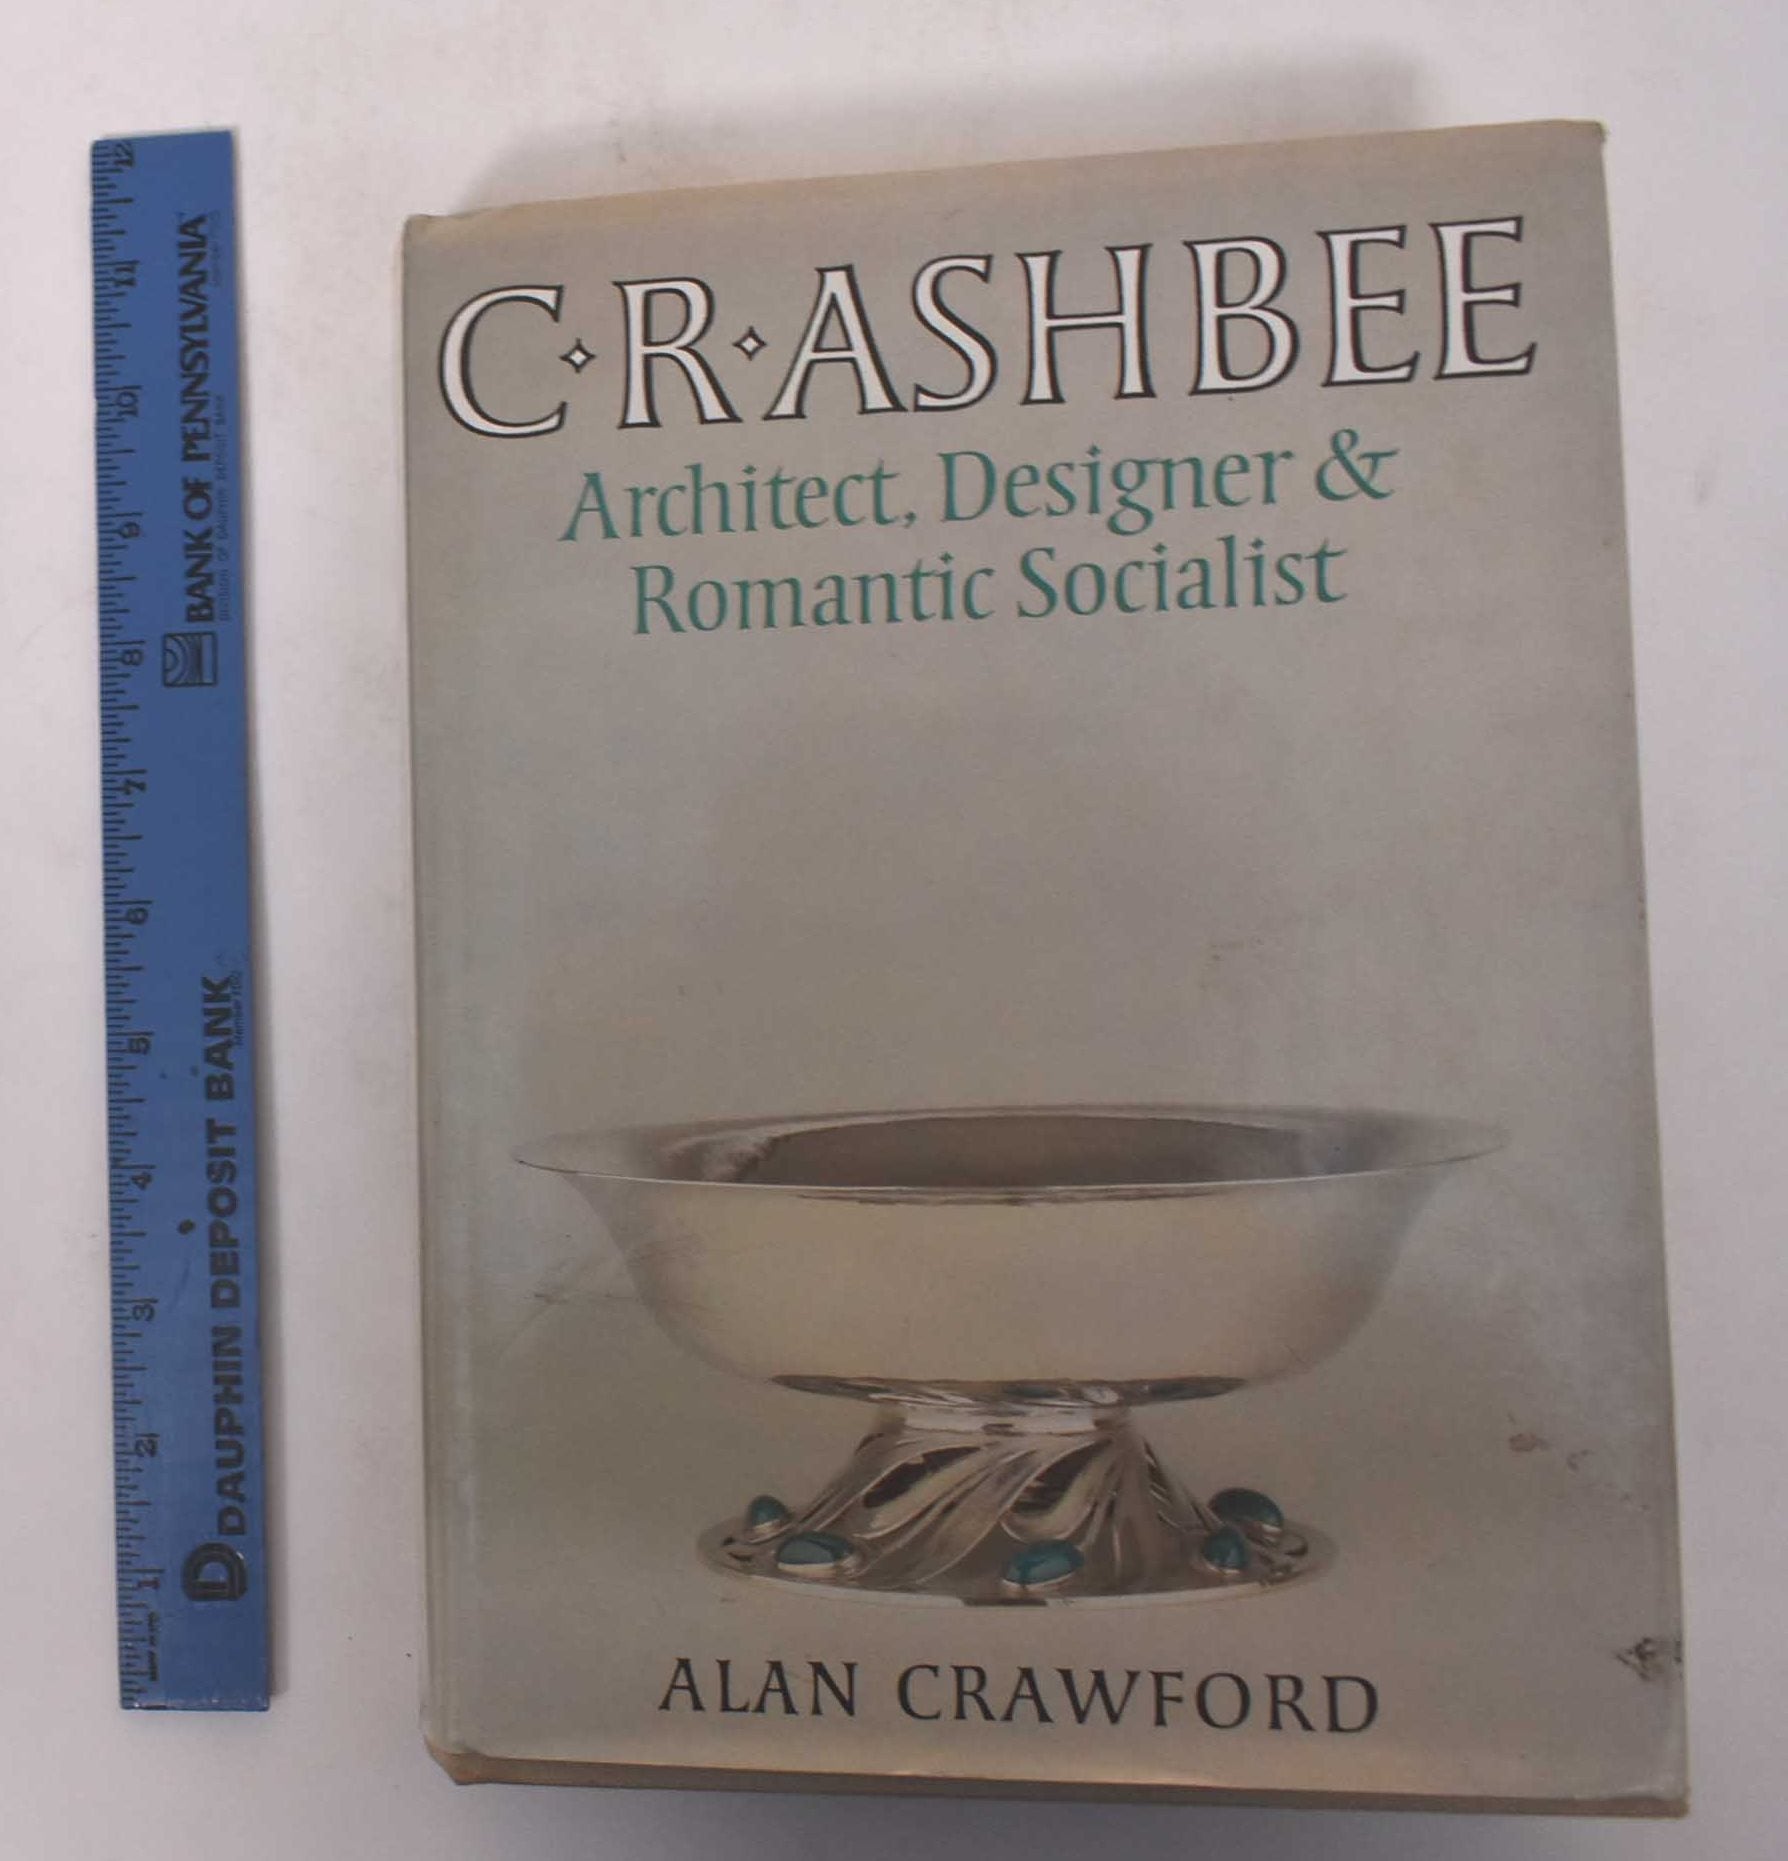 Crawford, Alan - Crashbee: Architect, Designer & Romantic Socialist